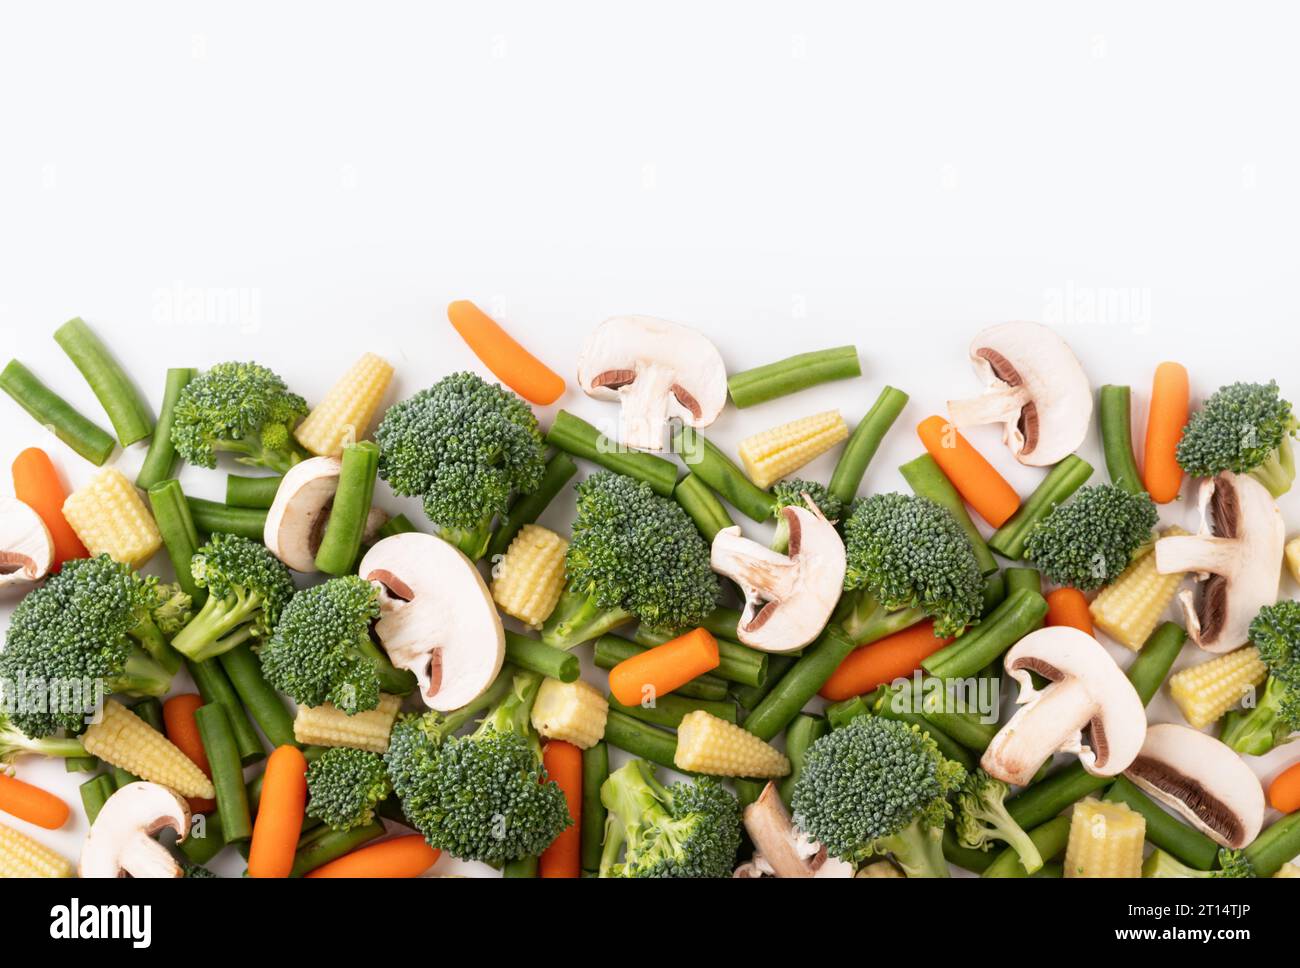 the mix raw vegetable. Flat lay of fresh raw organic vegetables on white background - broccoli, carrot, mushrooms, green beans, cauliflower, mini corn Stock Photo